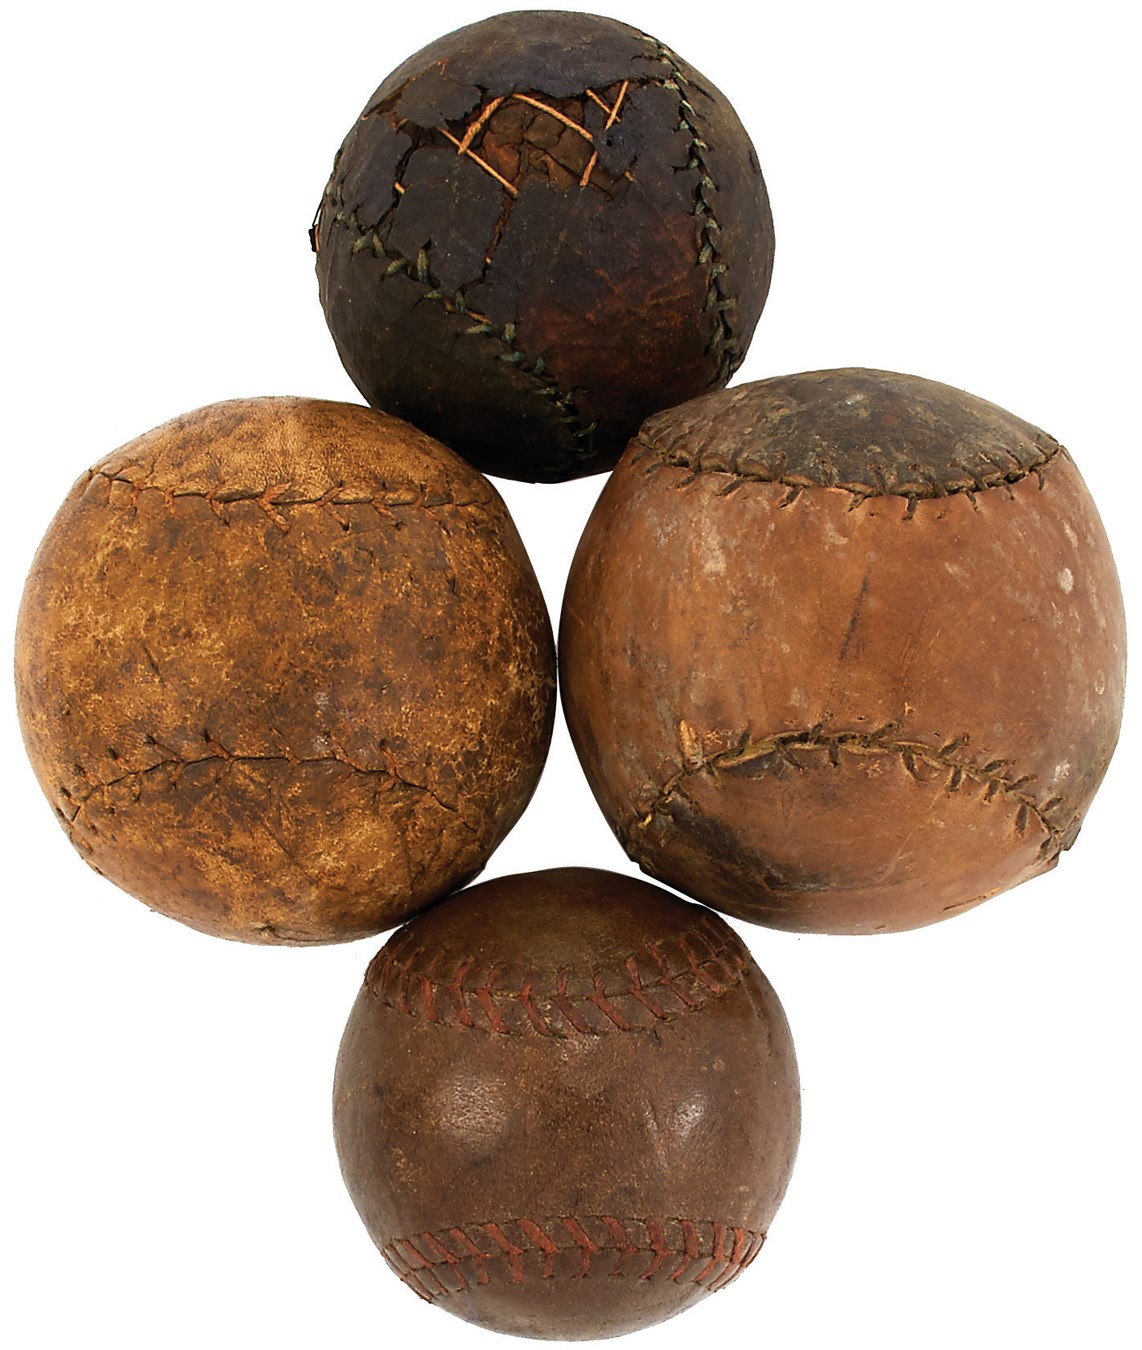 Antique Sporting Goods - 19th Century Baseballs w/Civil War Era Ball from 1860s Estate (4)